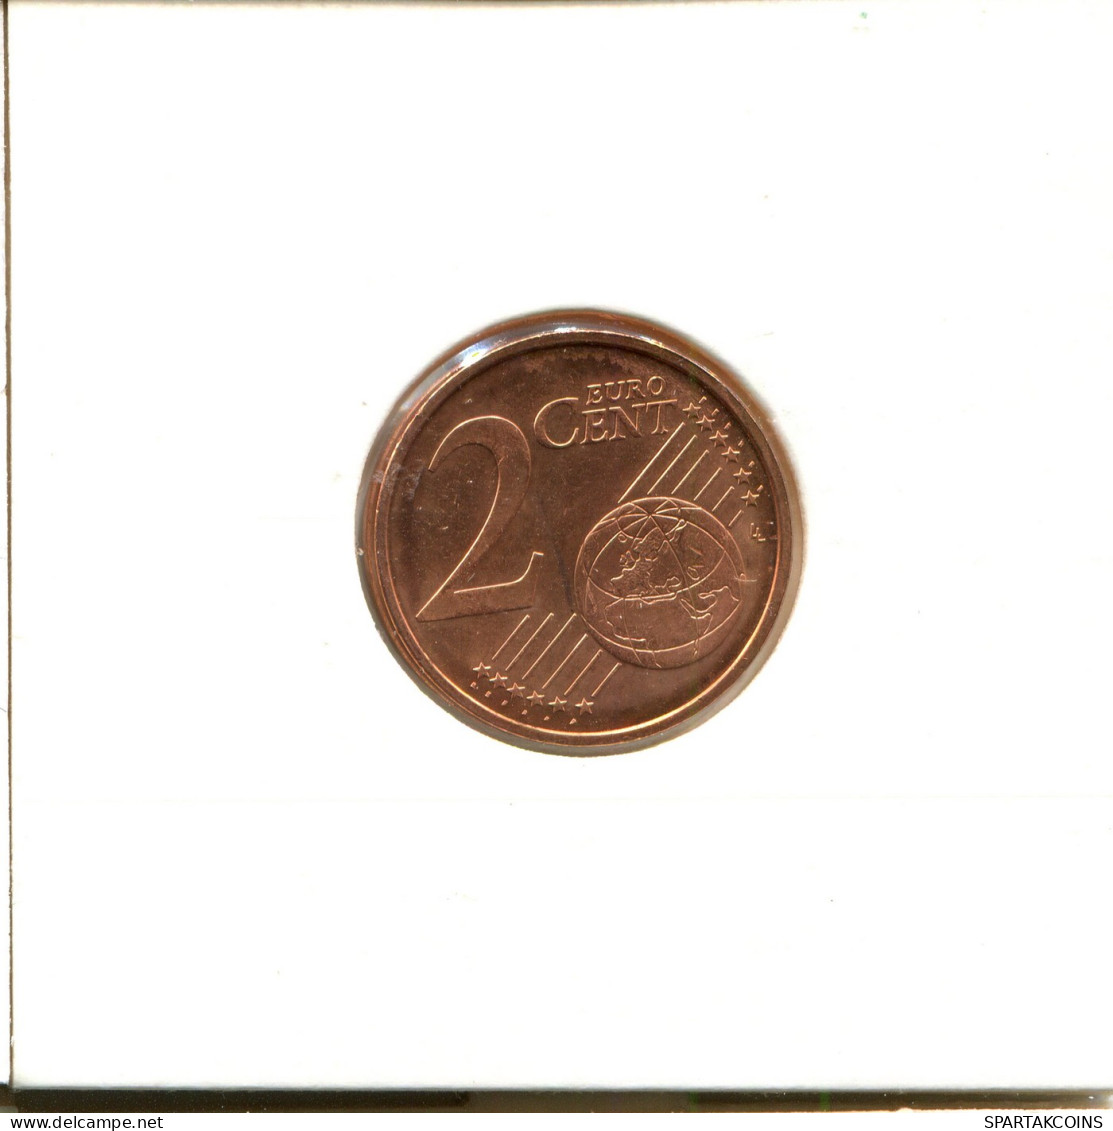 2 EURO CENTS 2011 ESTONIA Coin #EU067.U - Estonia